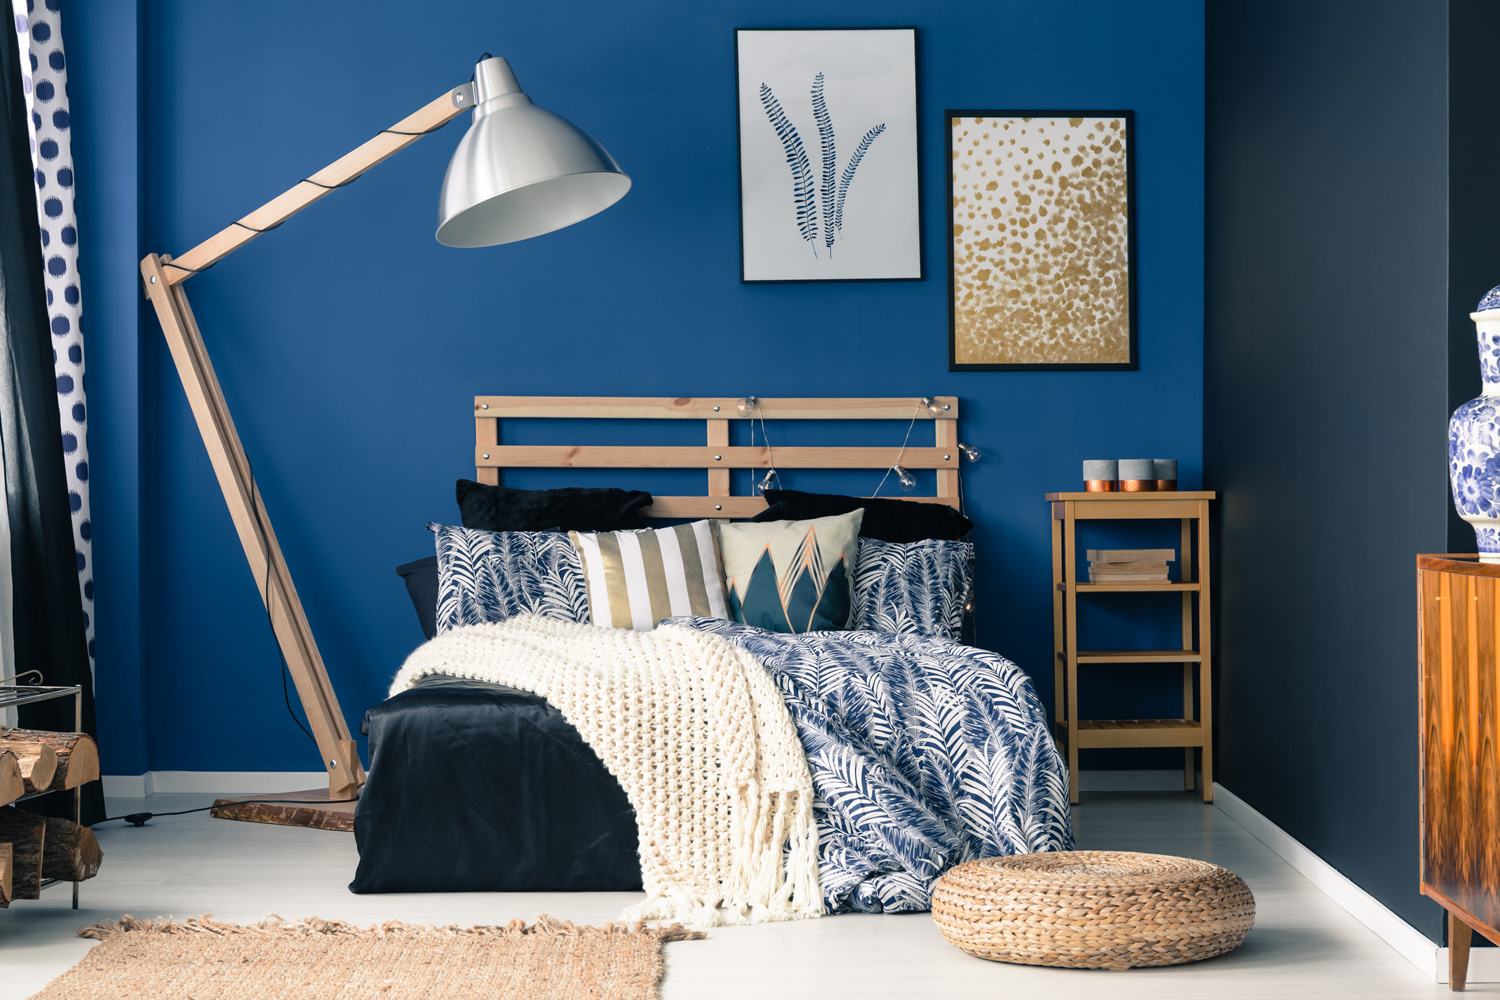 Stylish bedroom interior with dark blue wall